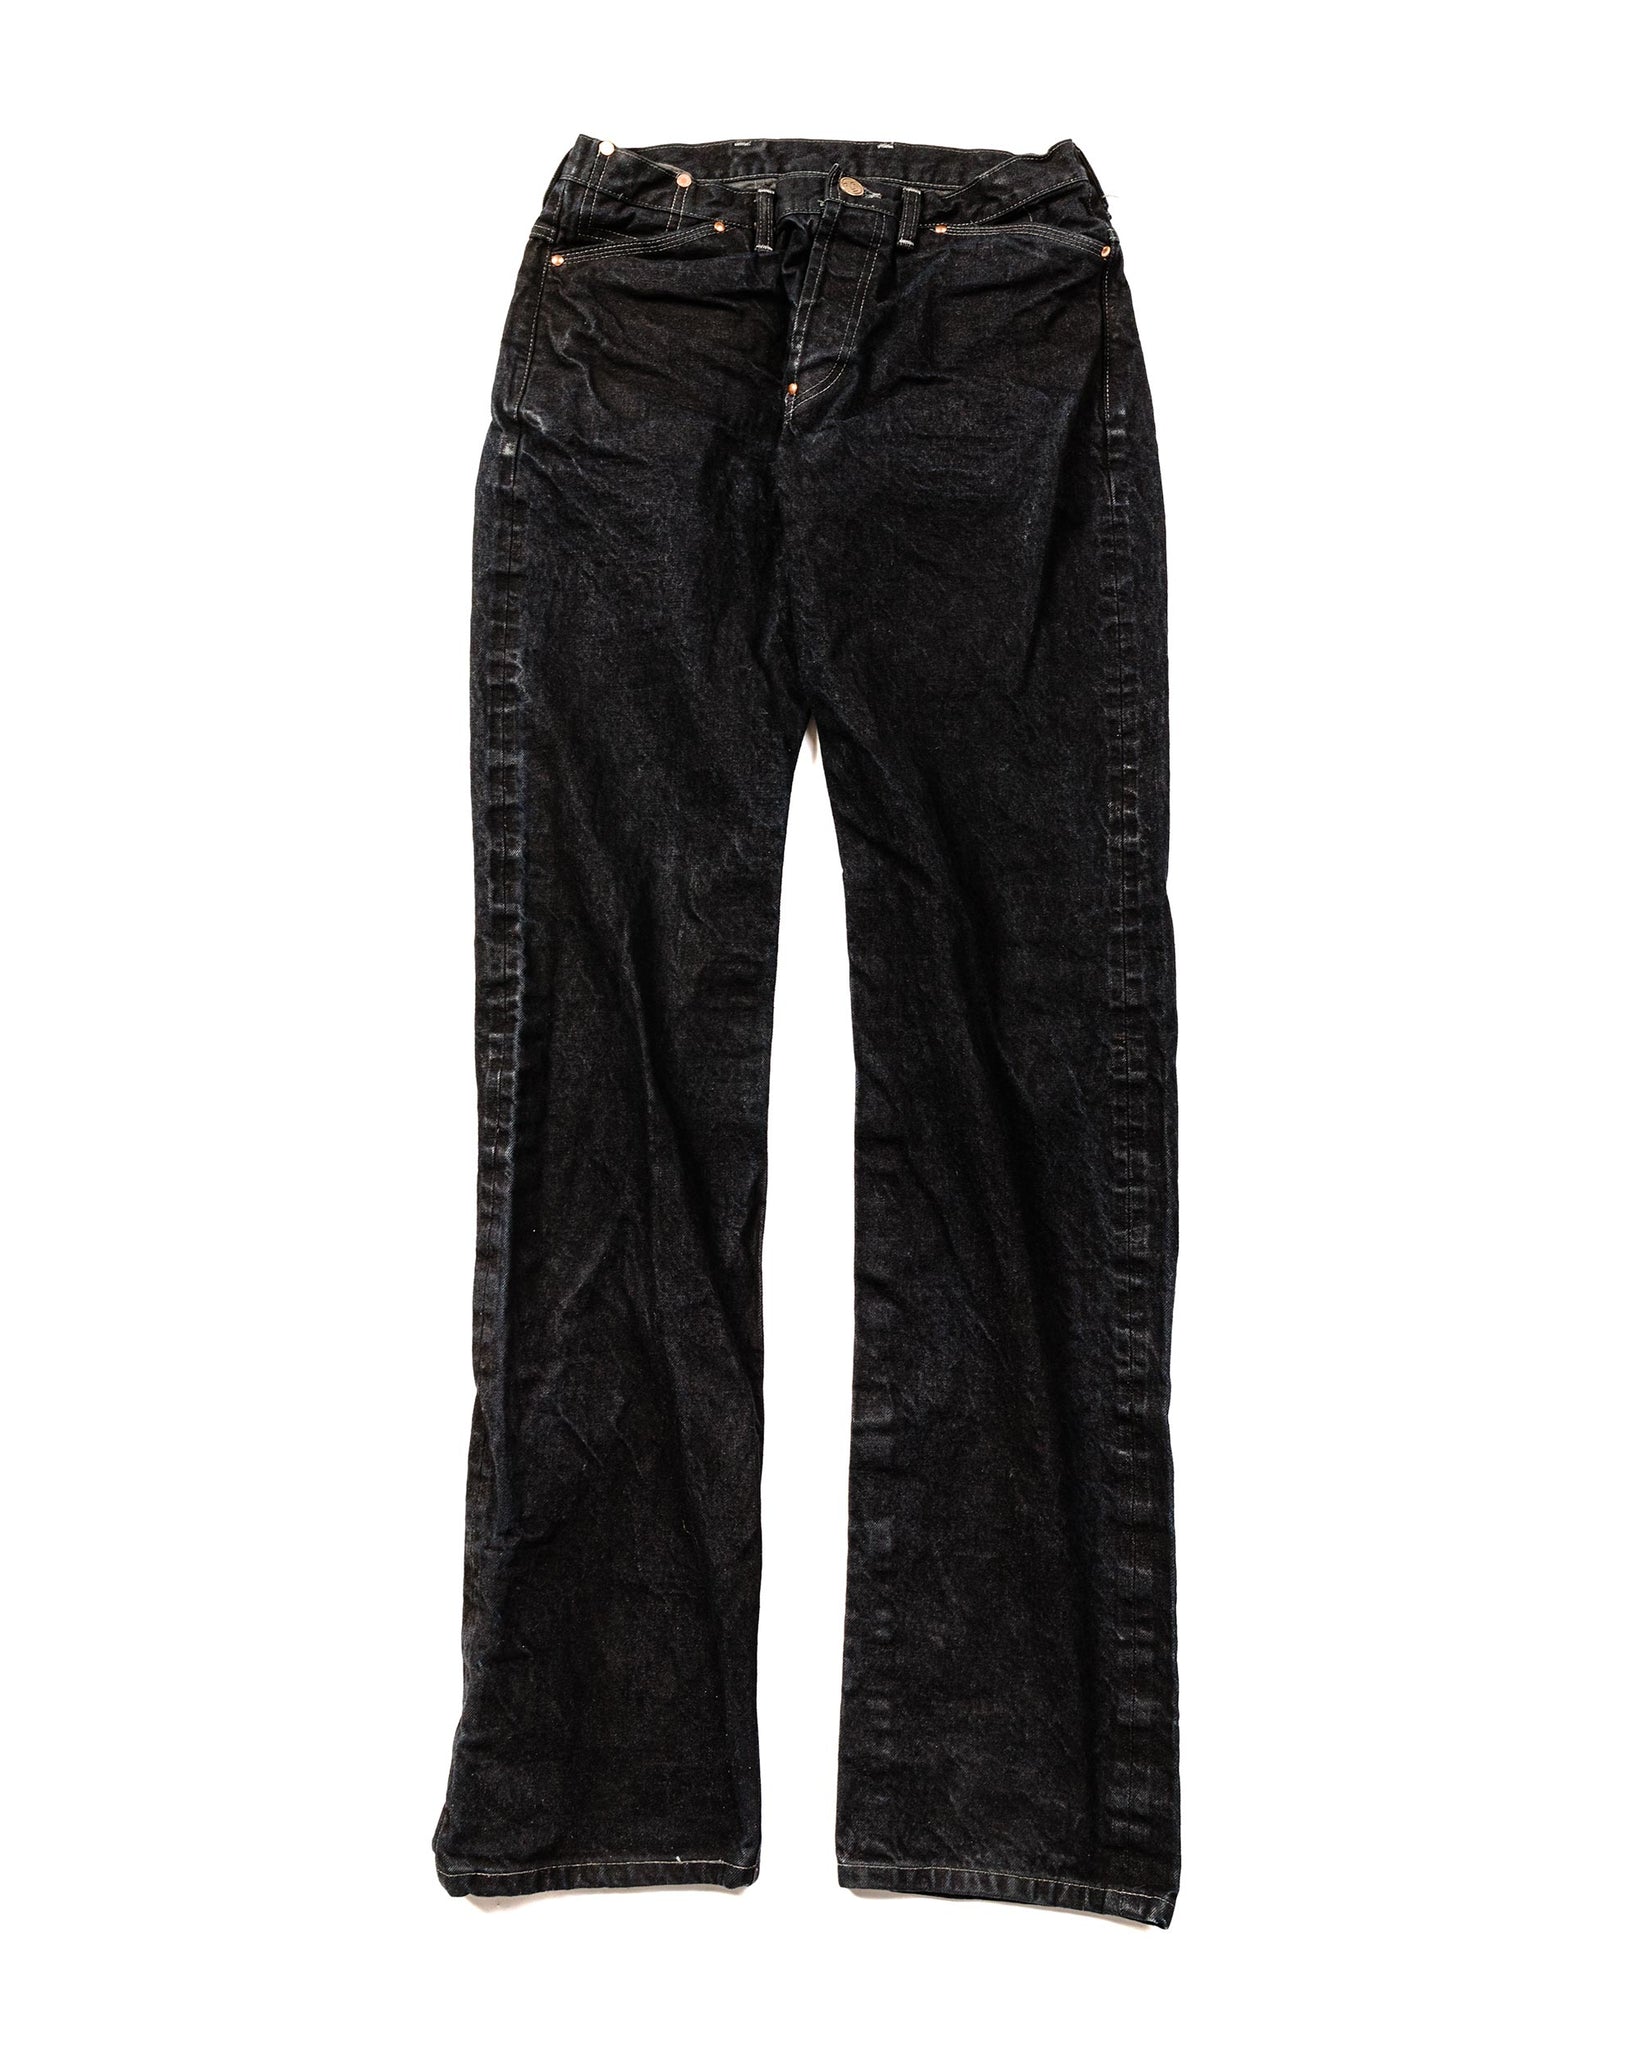 Tender Type 125 High Straight Jeans Mars Black Dyed 16oz Selvage Denim